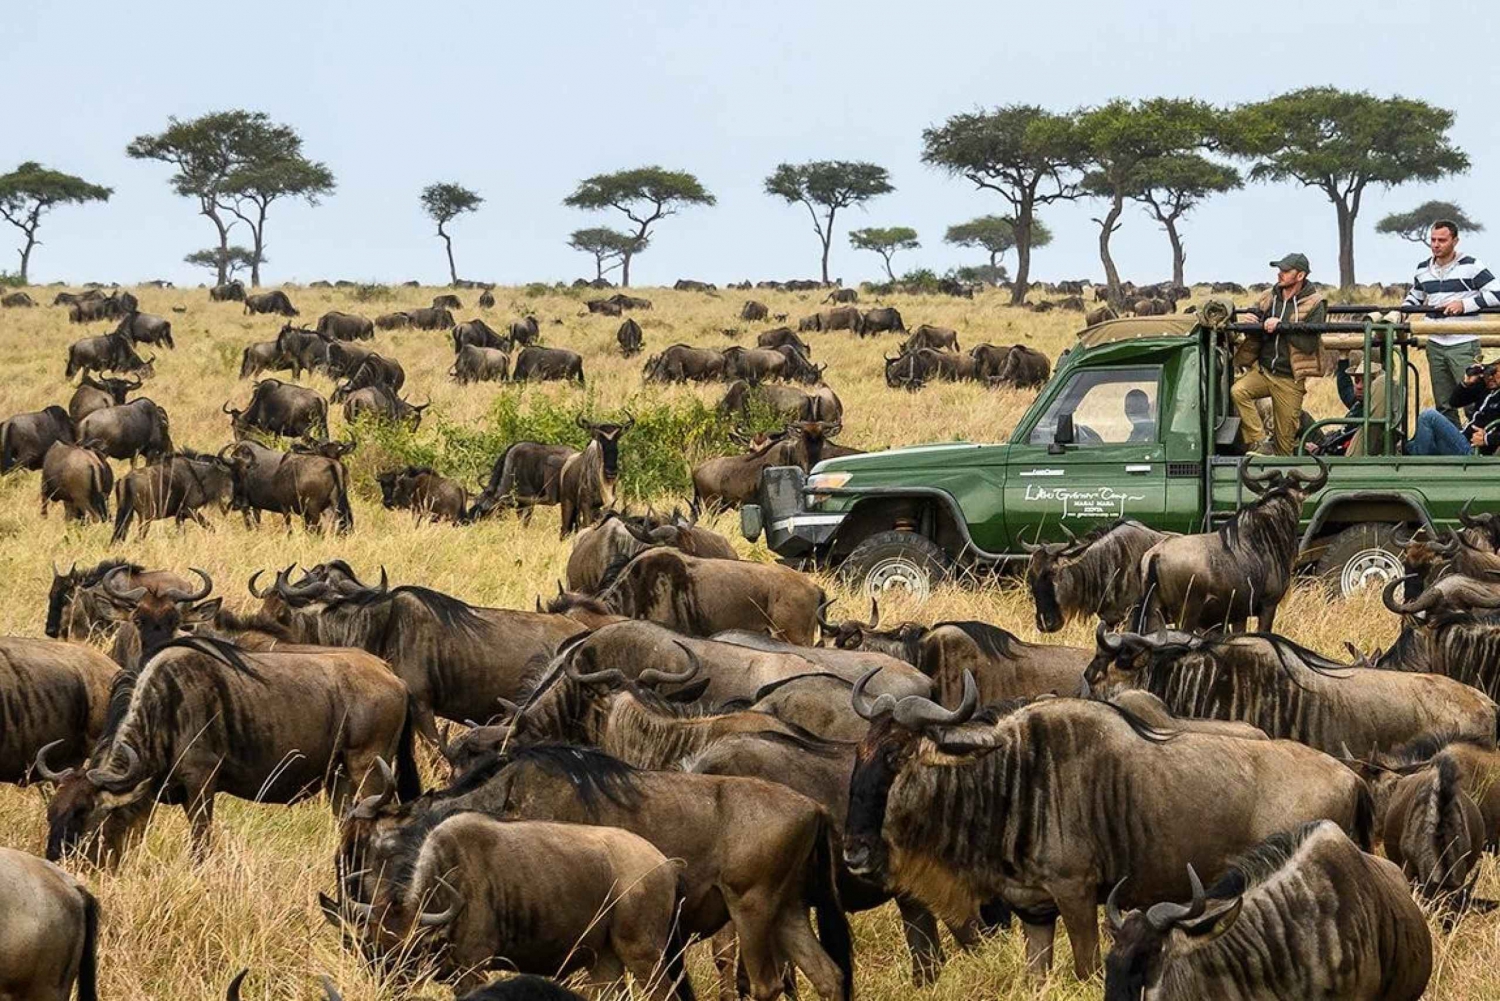 3 Tage Masai Mara Camping Safari mit einem 4x4 Land Cruiser Jeep